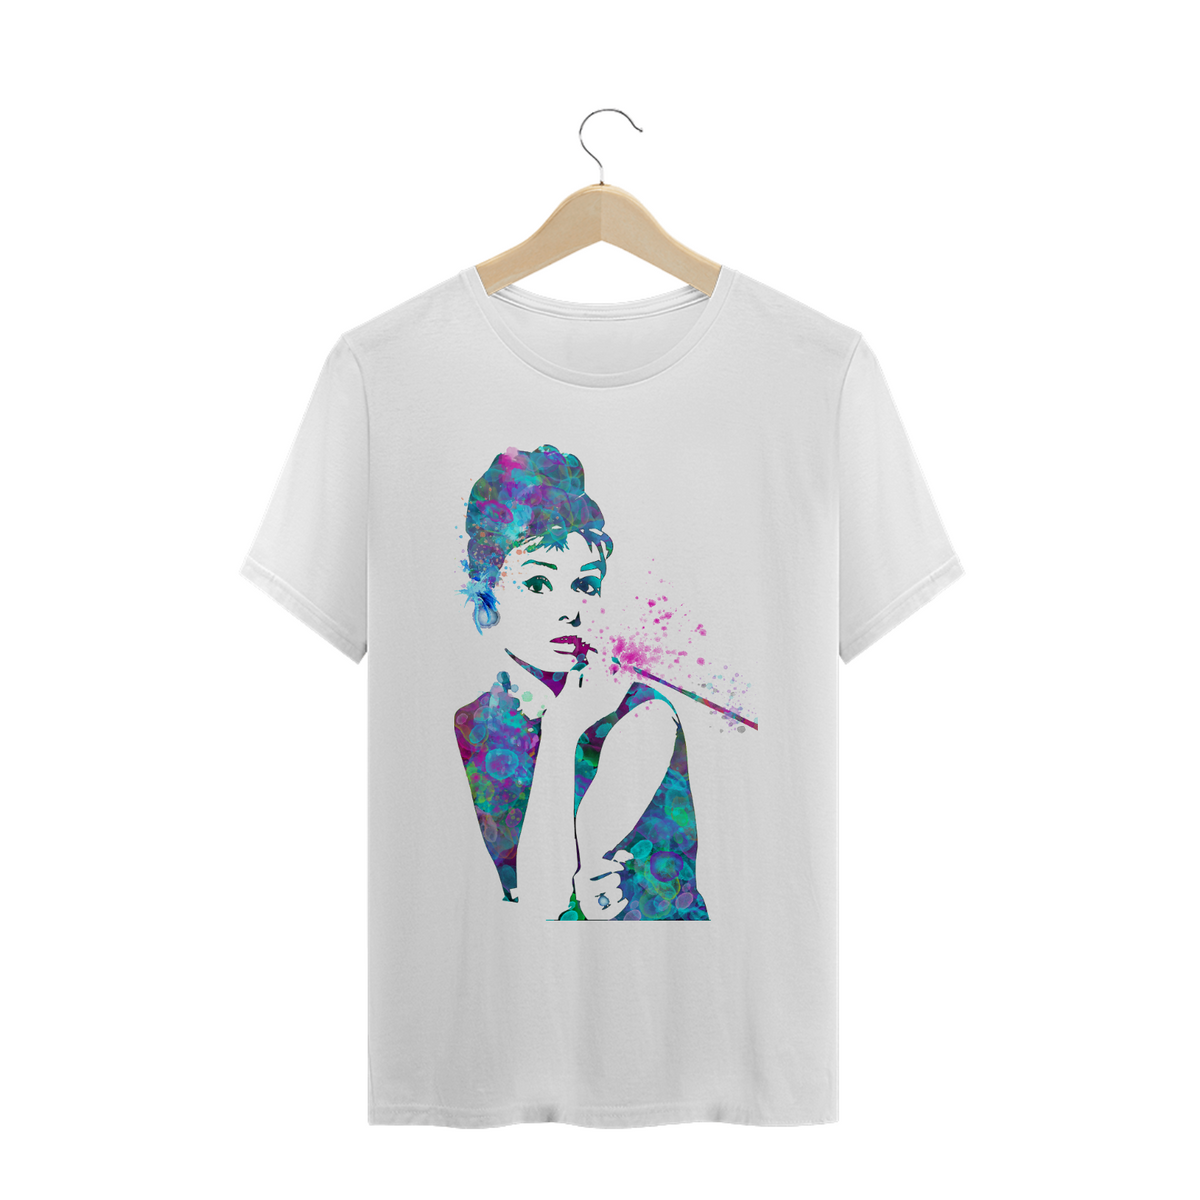 Nome do produto: Camisa Audrey Hepburn